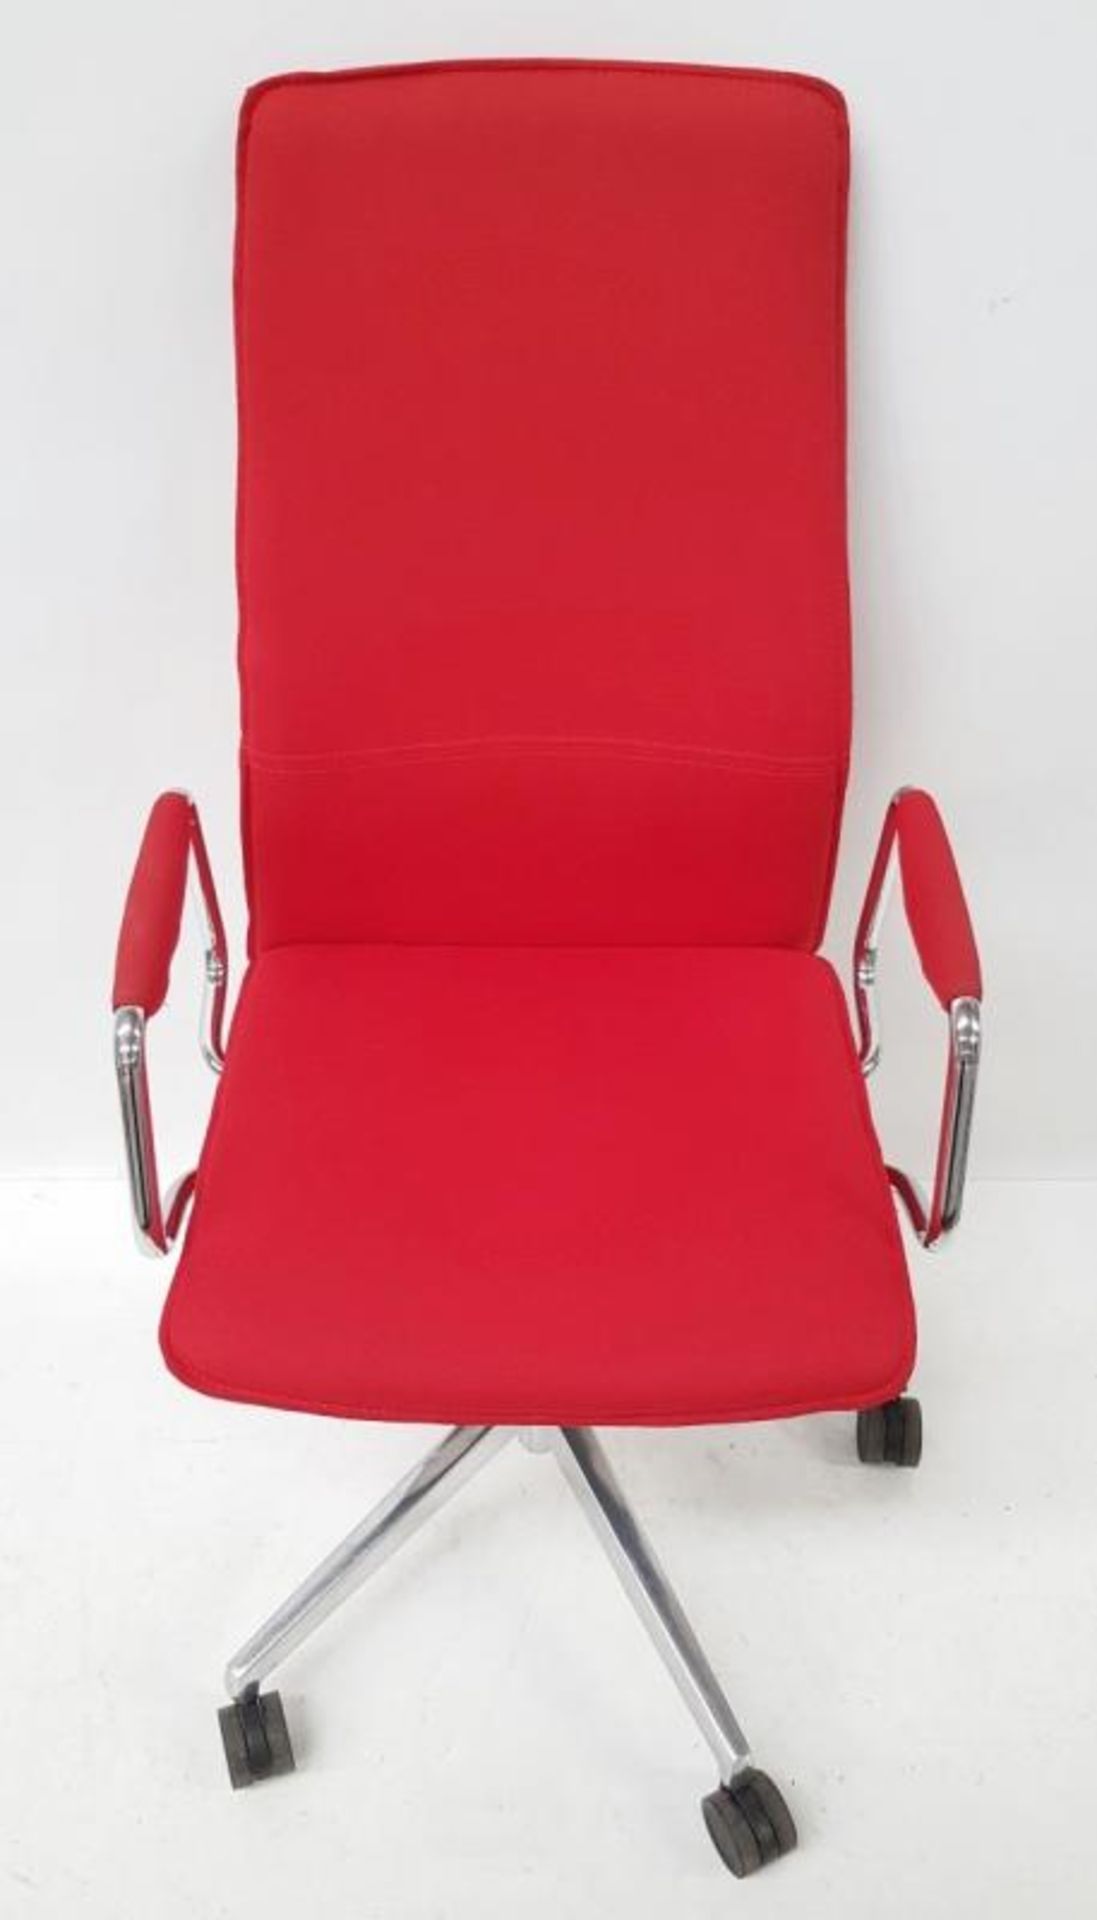 1 x 'Sven Christiansen' Premium Designer High-back Office Chair In Red (HBB1HA) - Used, In Very Good